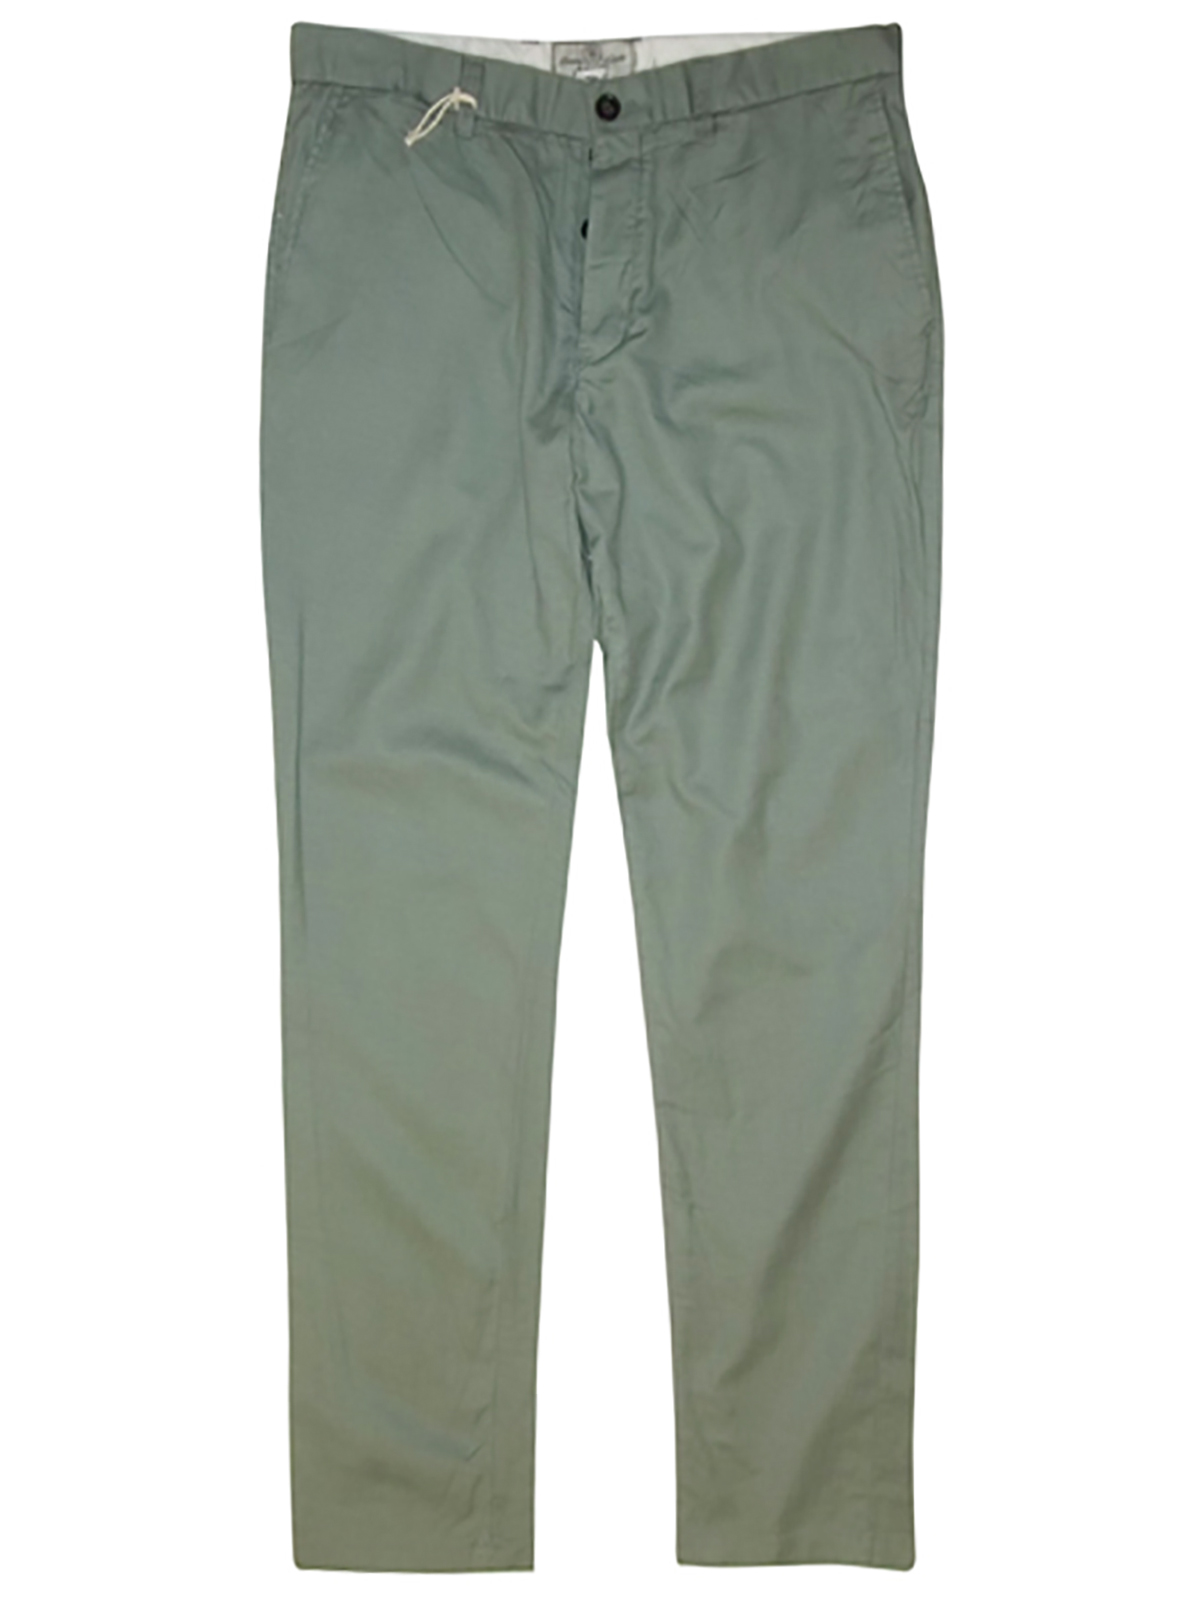 N3xt Sage Cotton Rich Straight Leg Trousers - Size 32R to 36R